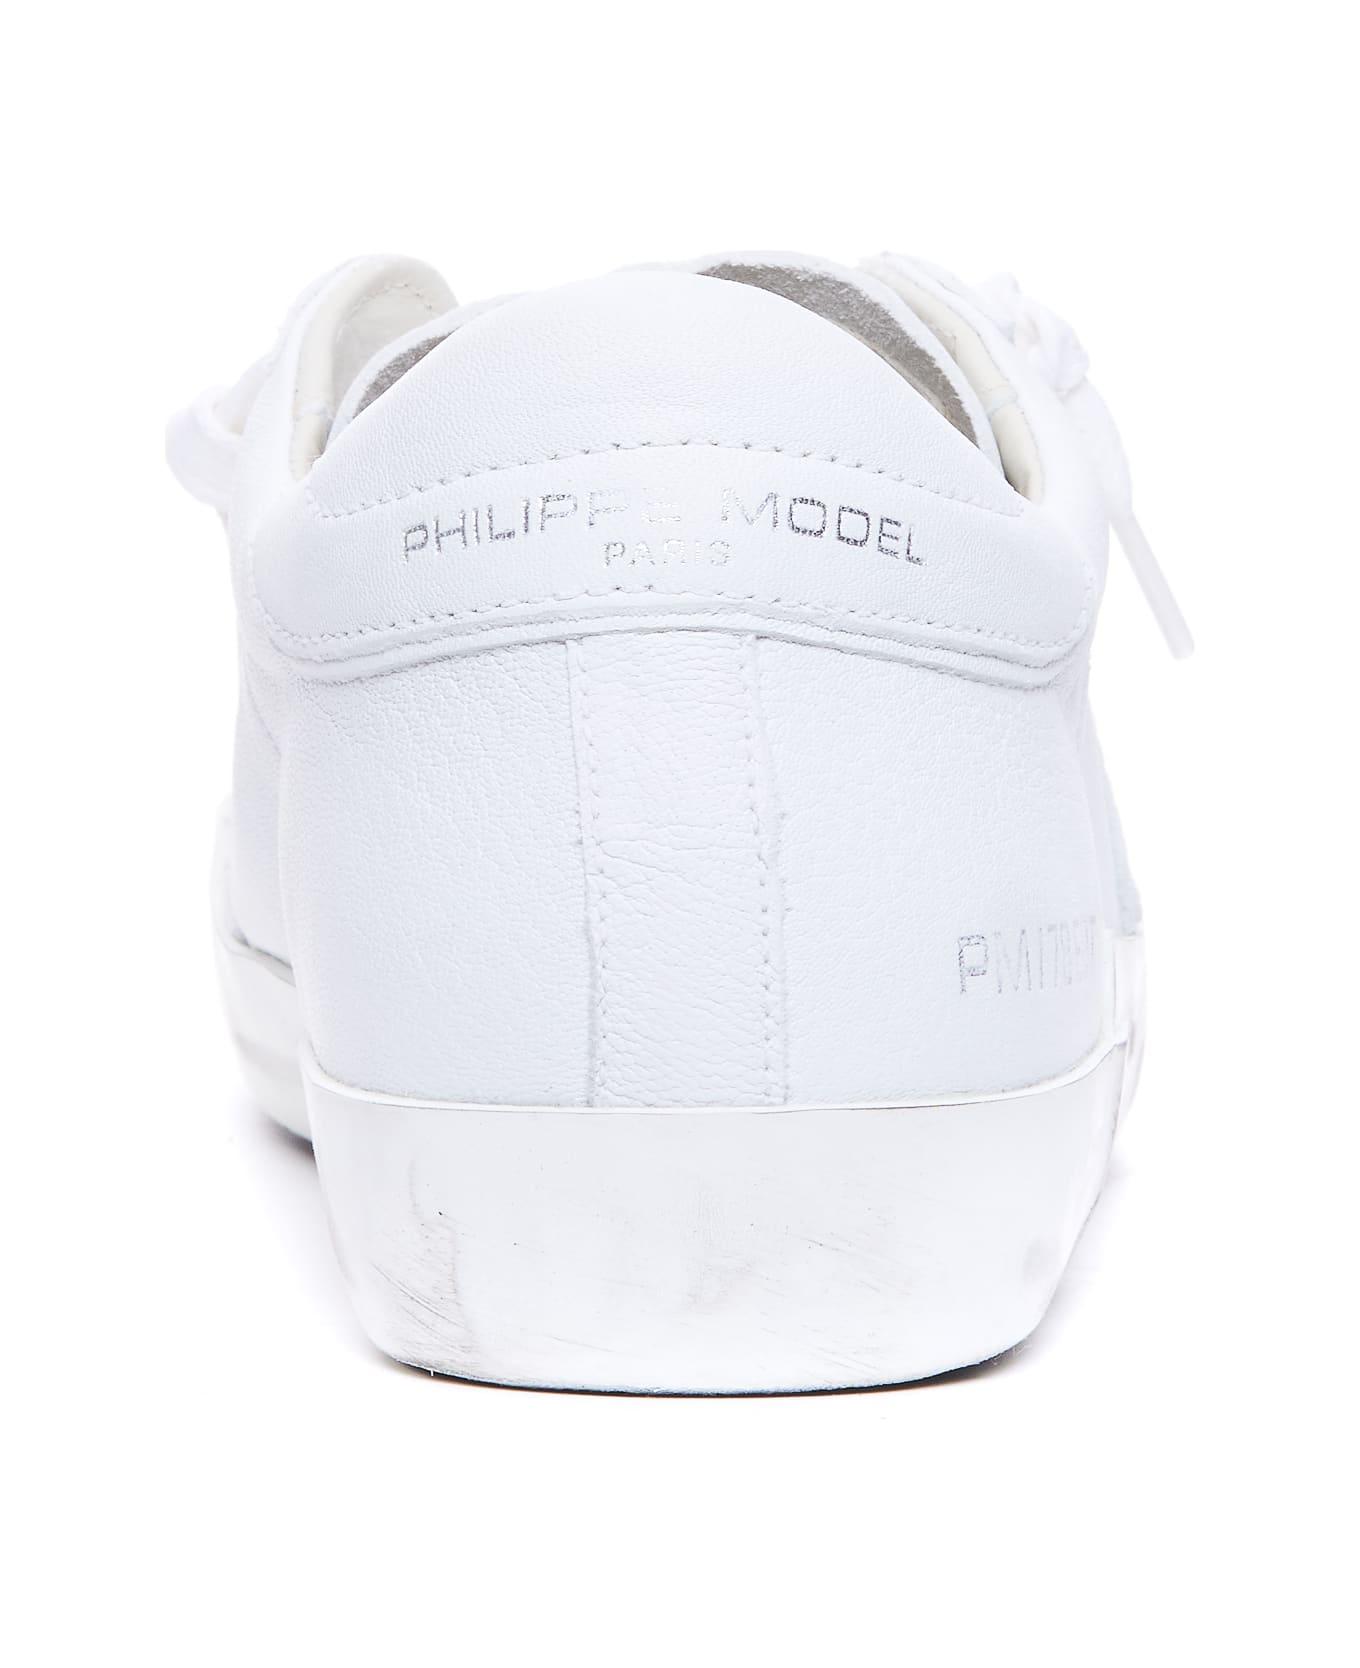 Philippe Model Prsx Sneakers - White スニーカー